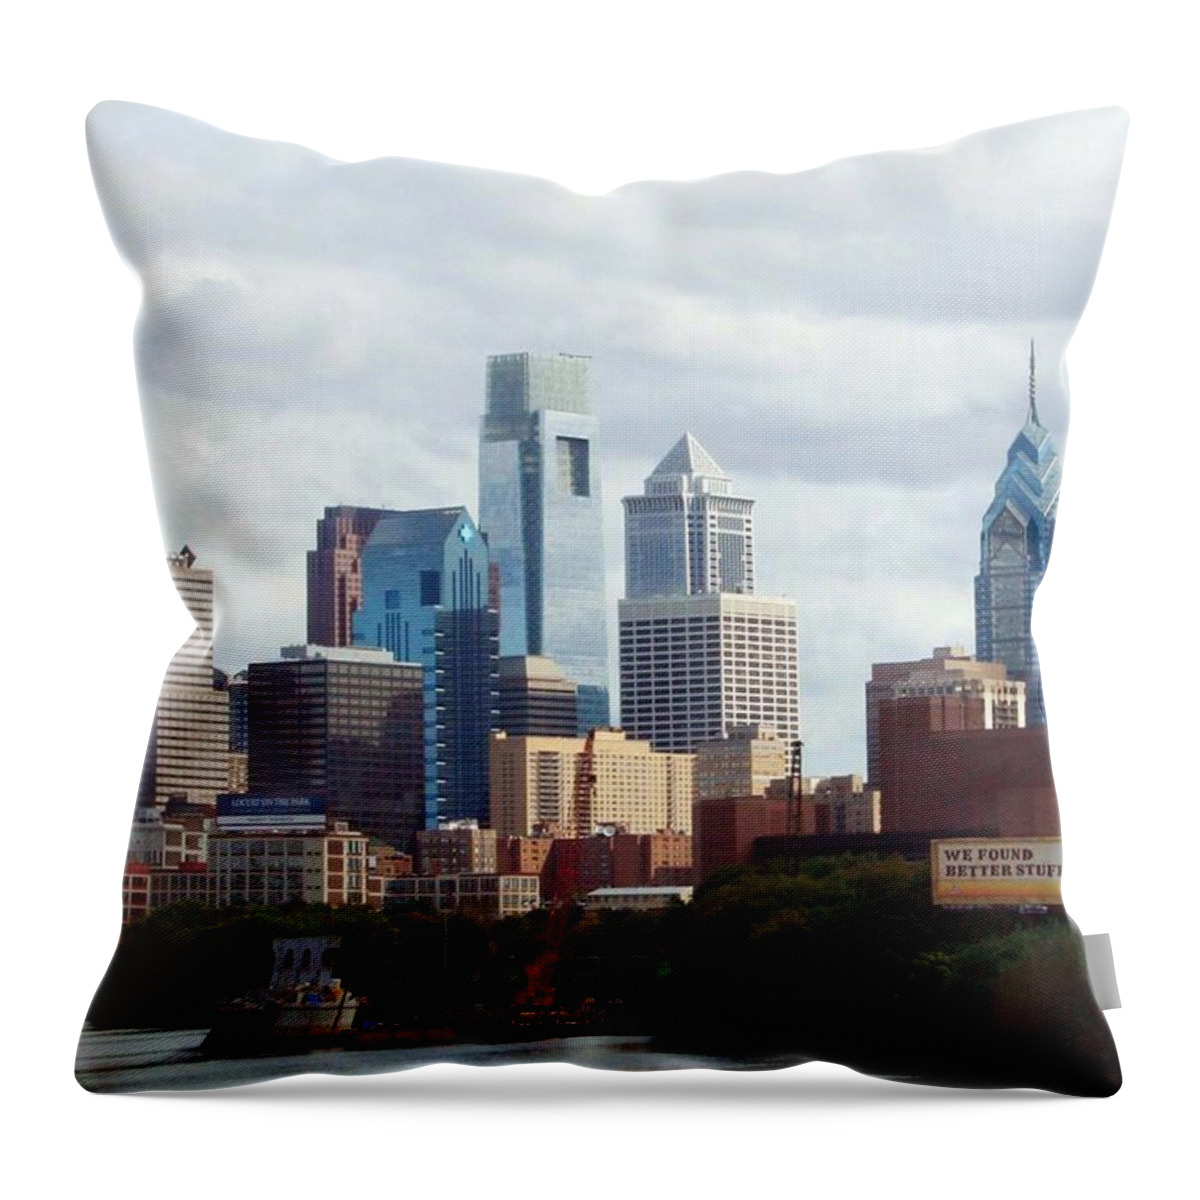 Philadelphia Throw Pillow featuring the photograph City of Philadelphia by Linda Sannuti